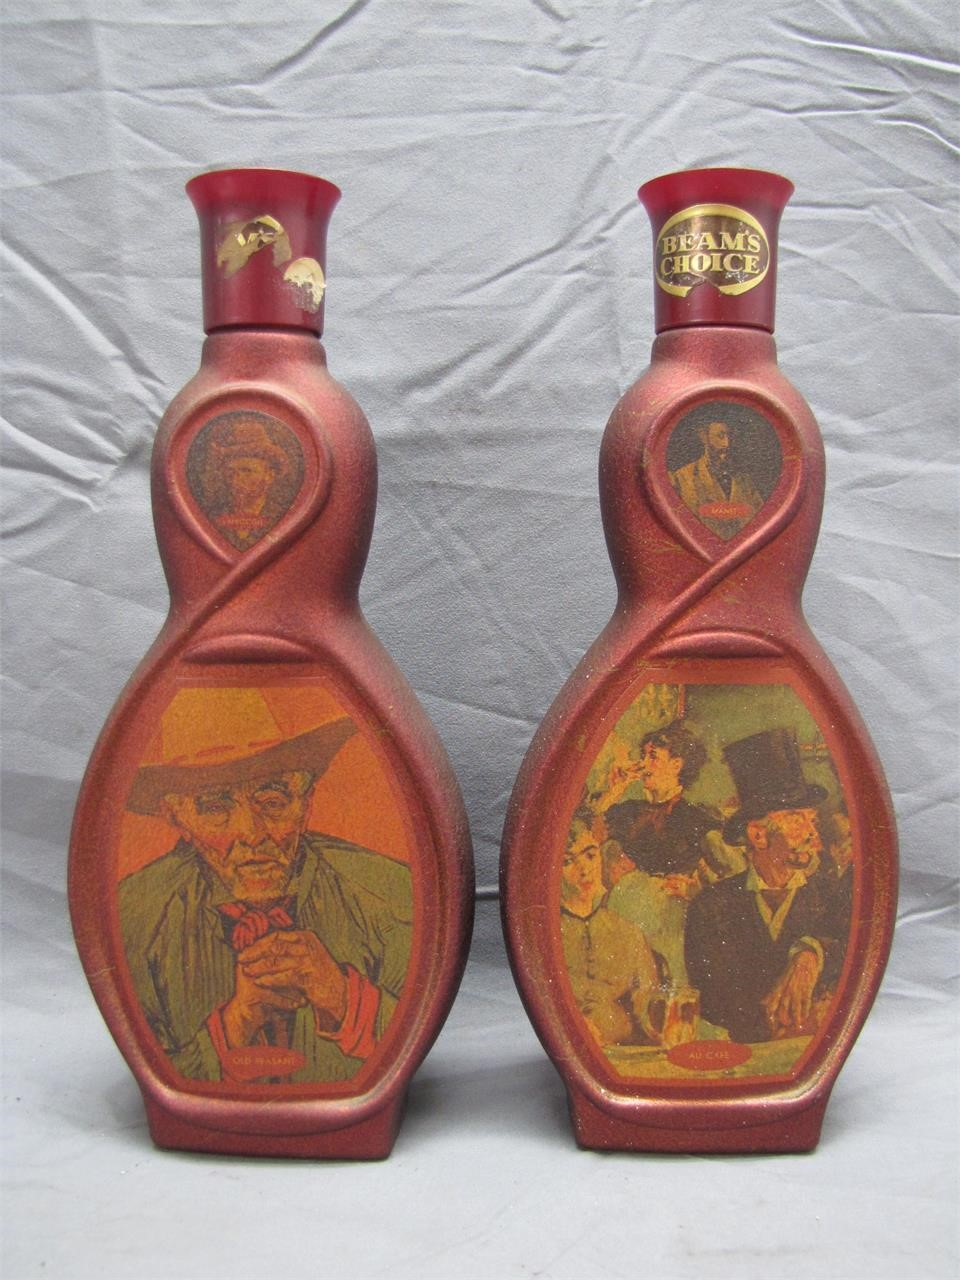 Pair Of Vintage Beams Choice Bourbon Whiskey